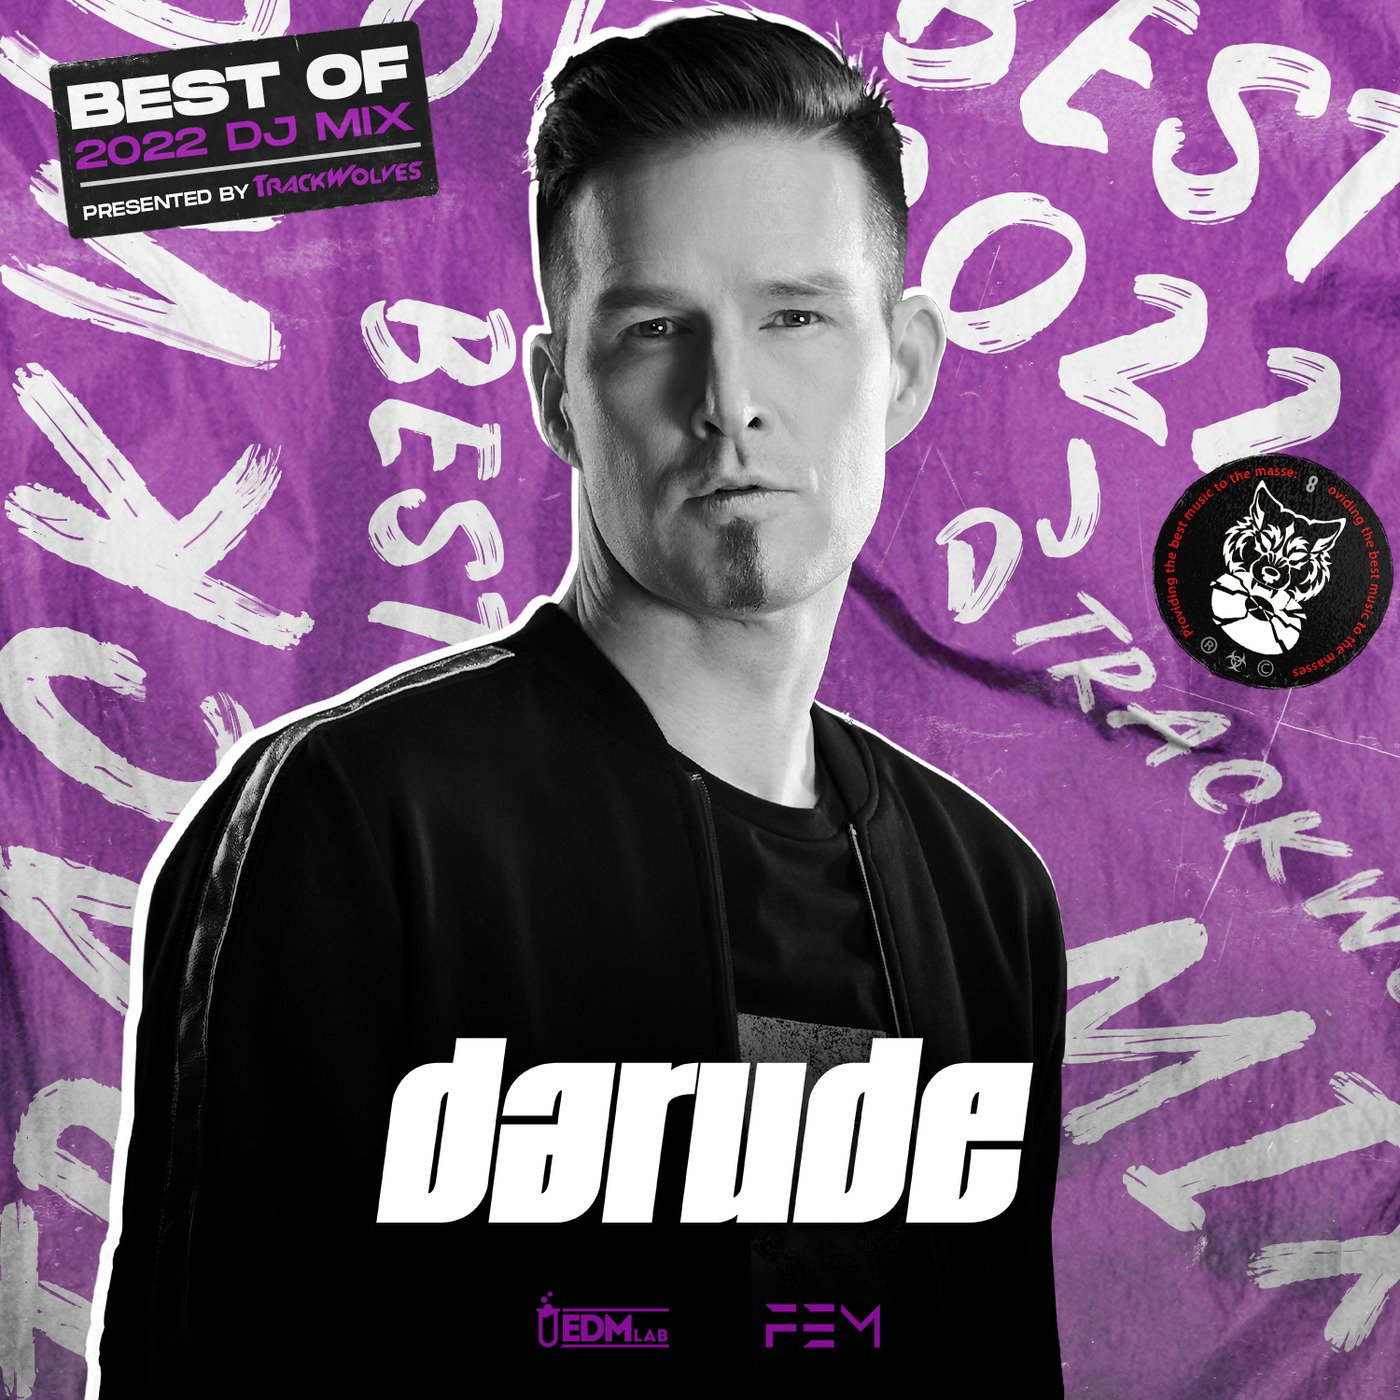 Darude TrackWolves Best Of 2022 DJ Mix